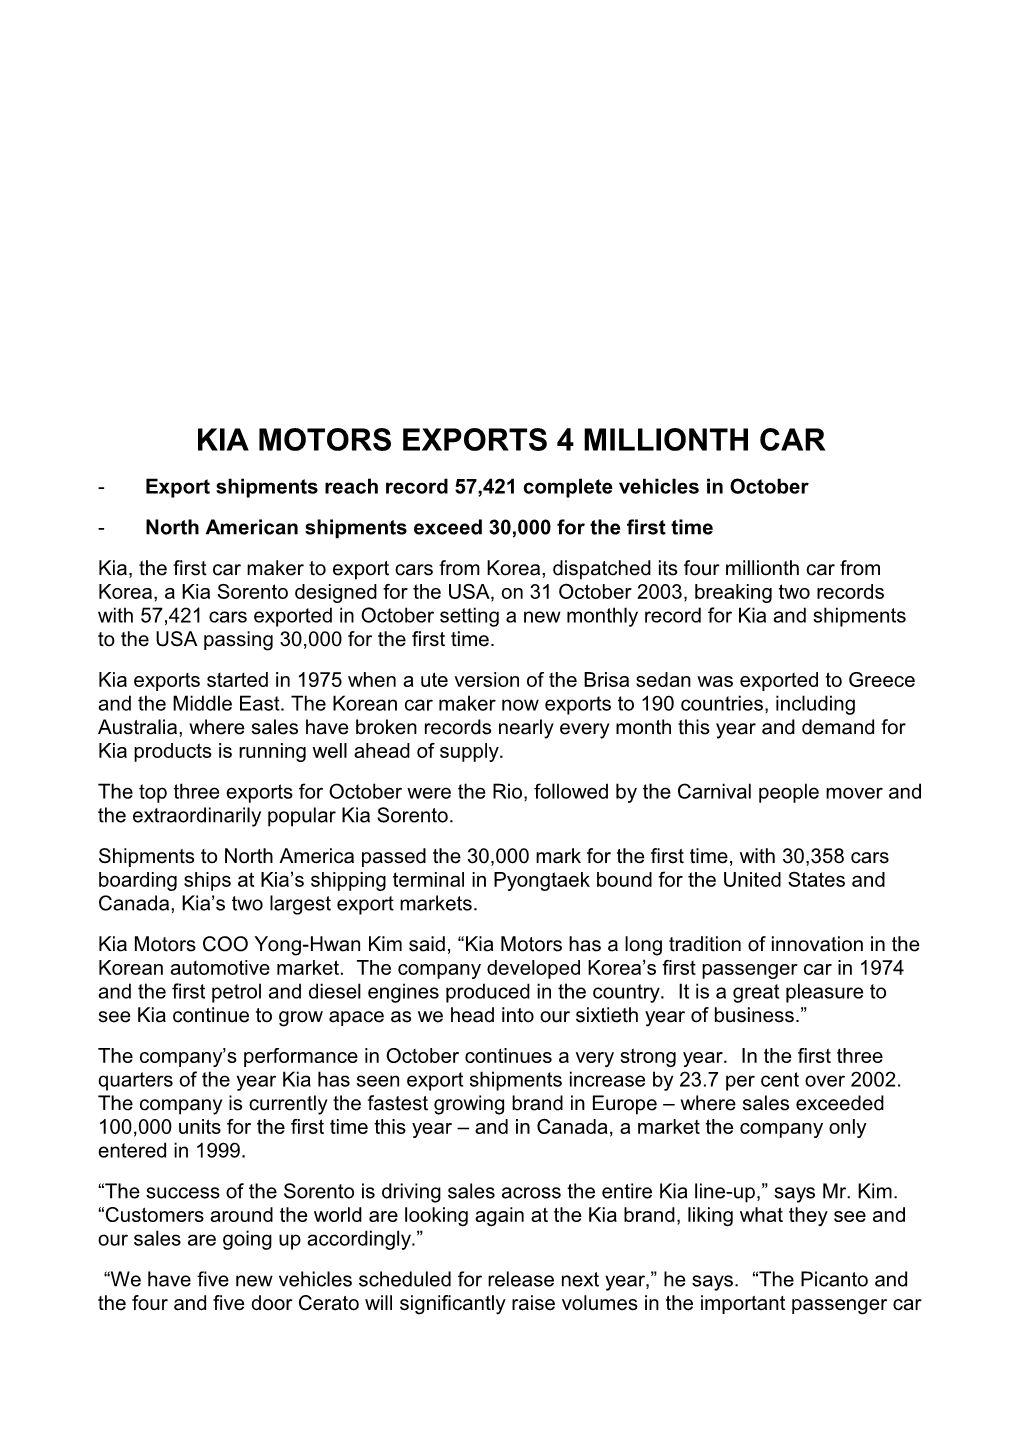 Kia Motors Exports 4 Millionth Car